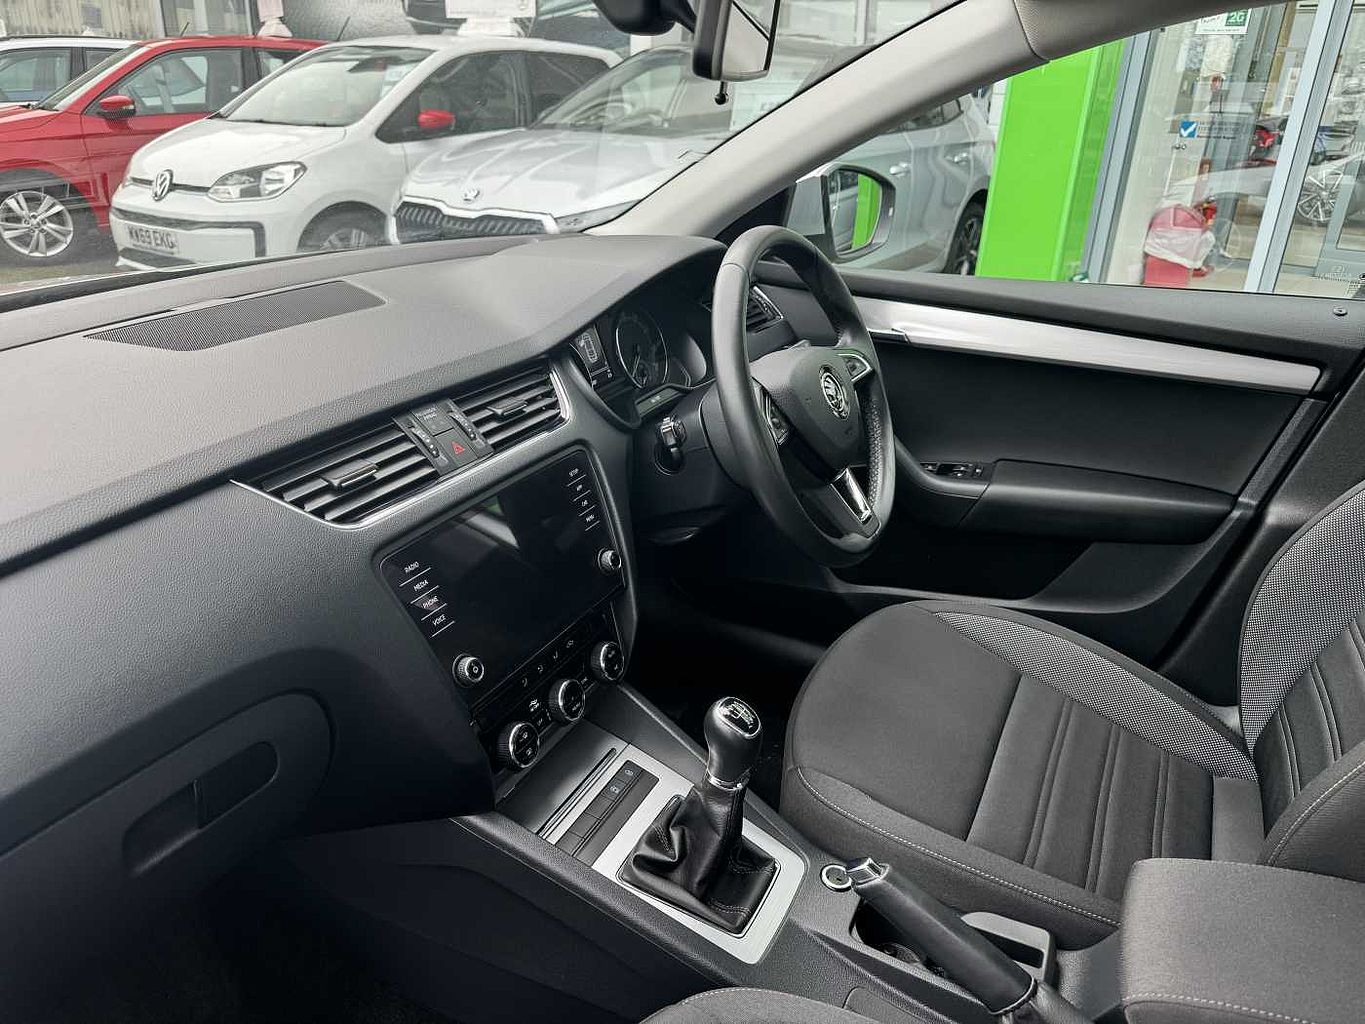 SKODA Octavia Hatchback (2017) 1.0 TSI SE (115PS)